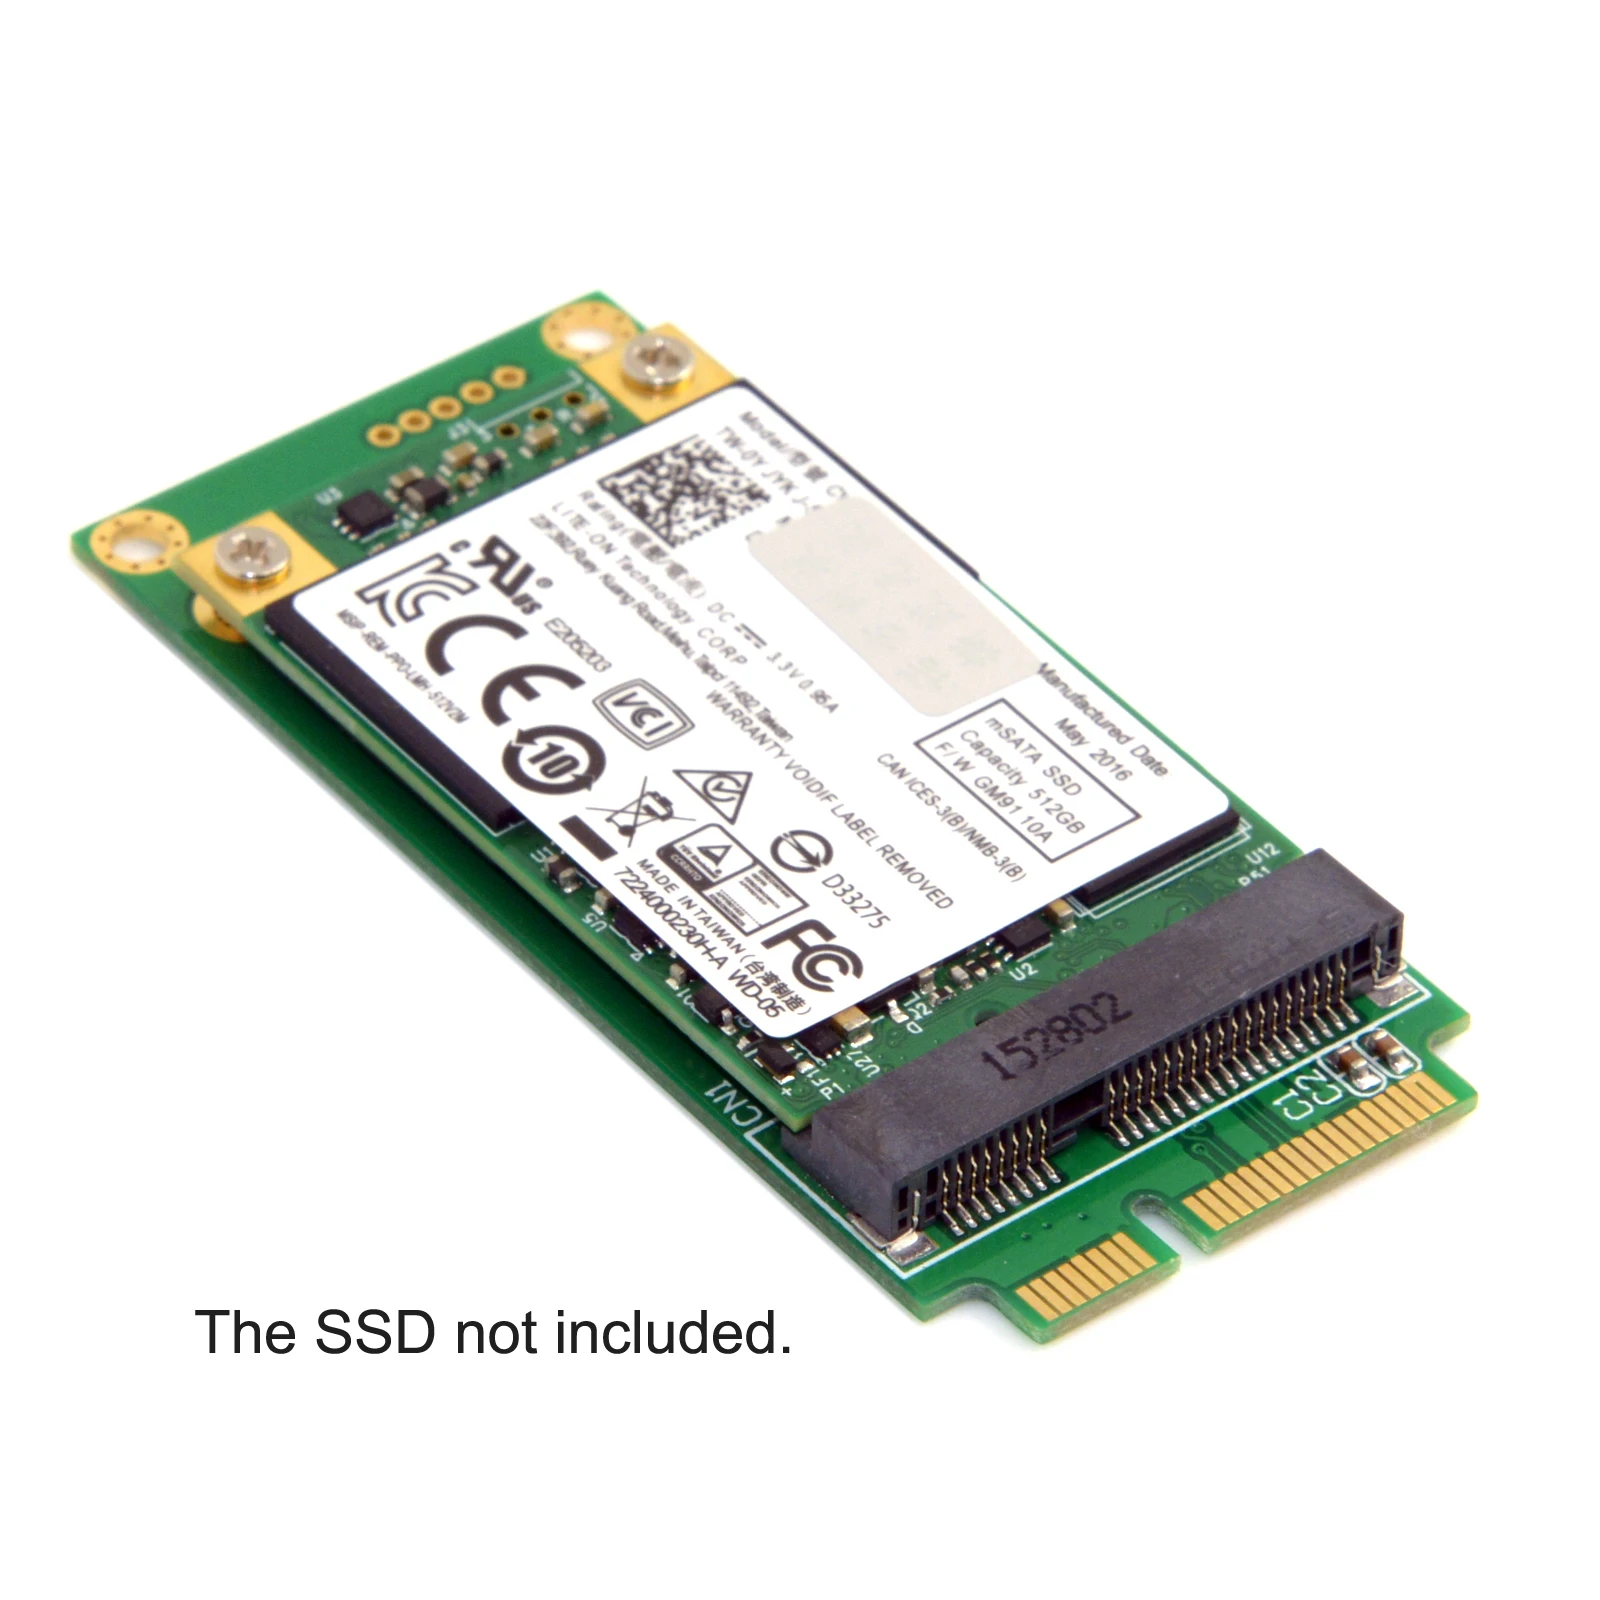 3x7cm Mini PCI-e SATA SSD for Asus Eee 1000 S101 900 901 900A T91 to 3x5cm mSATA Adapter